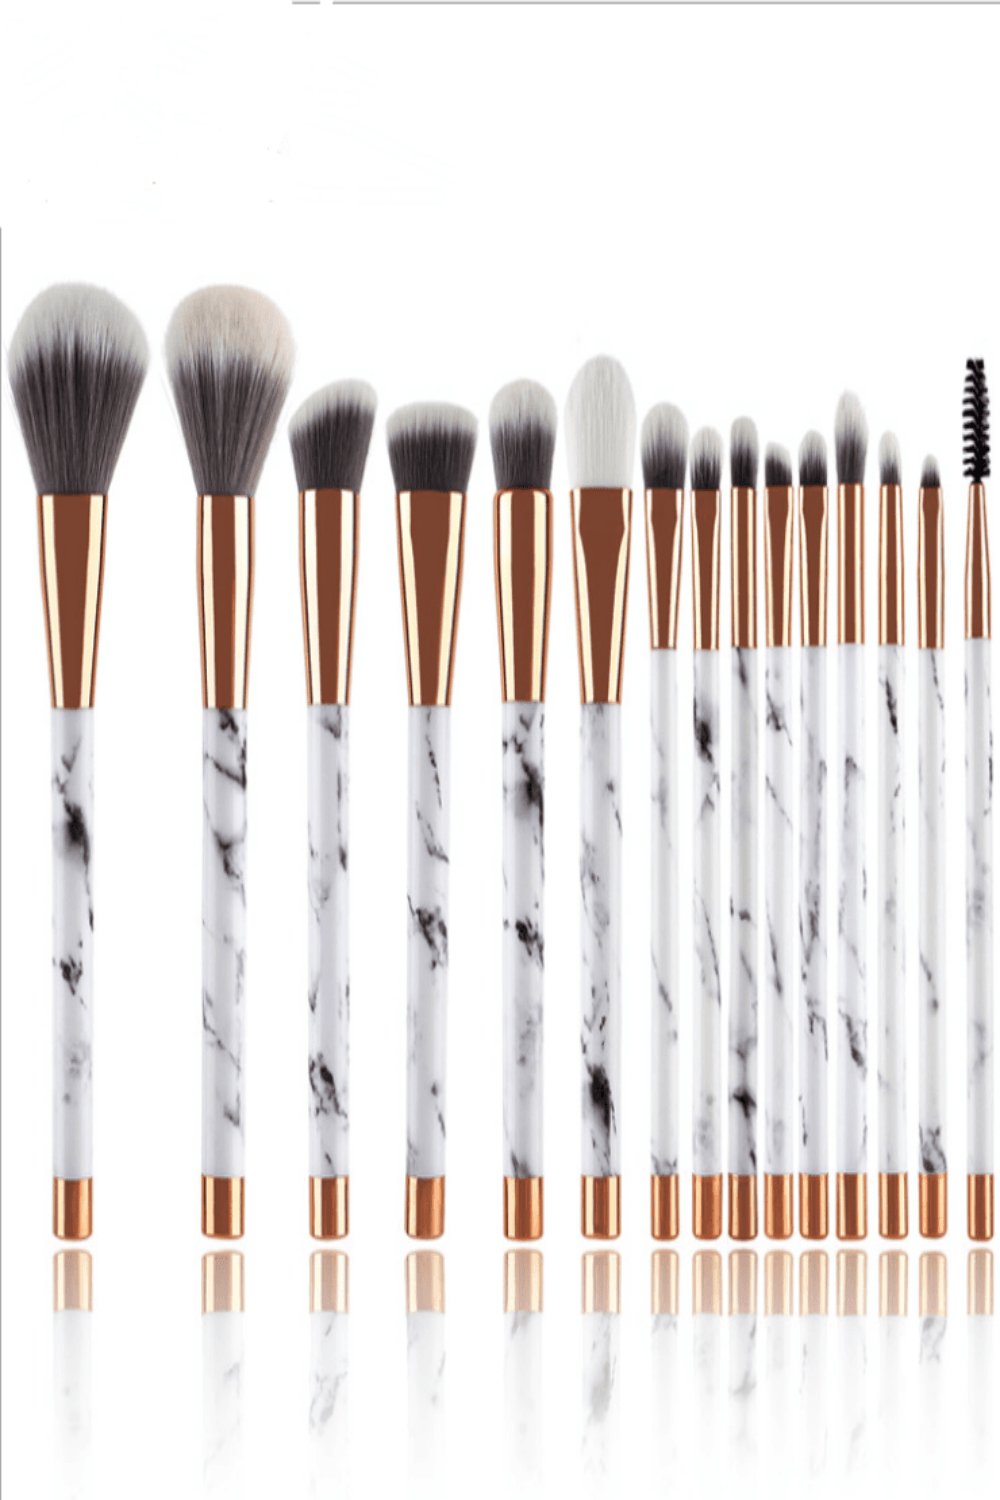 Marble Makeup Brush Sets - 11 Pack - TGC Boutique - Makeup Brush Set